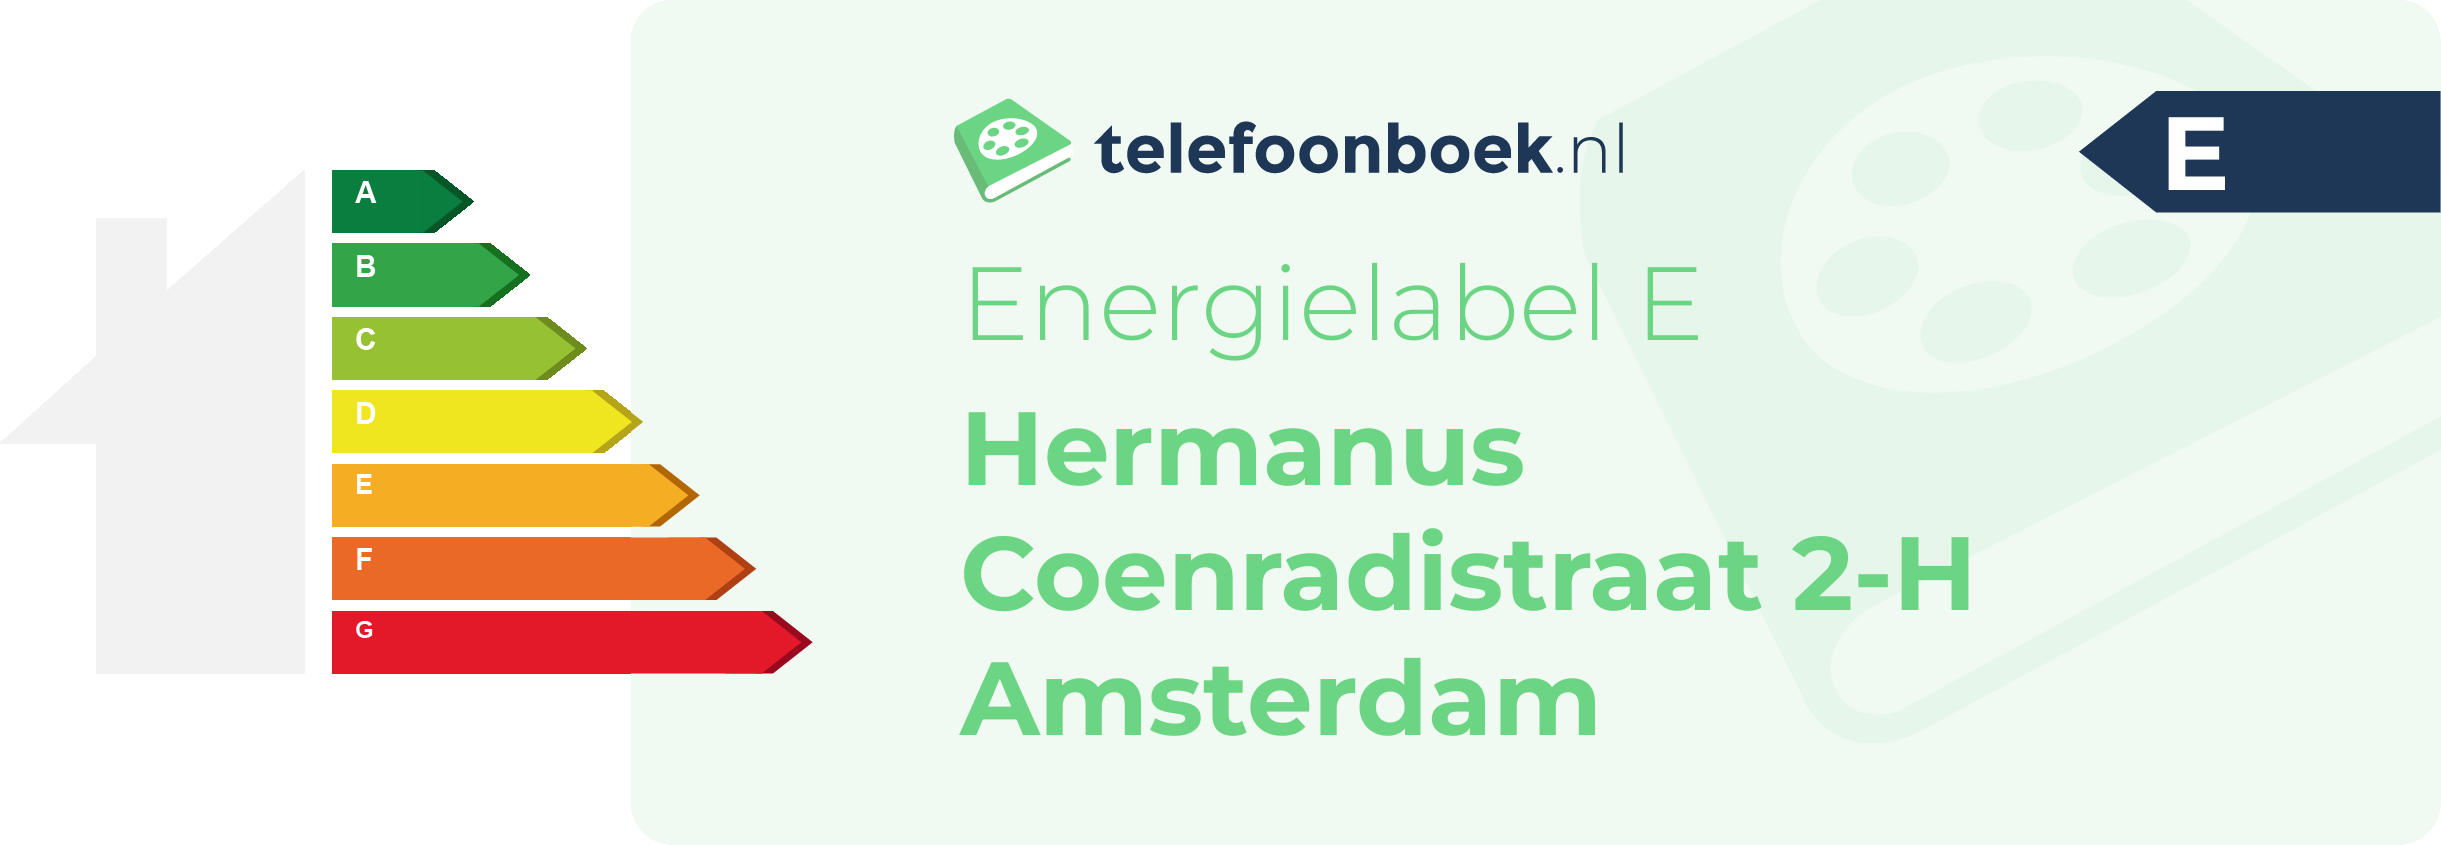 Energielabel Hermanus Coenradistraat 2-H Amsterdam